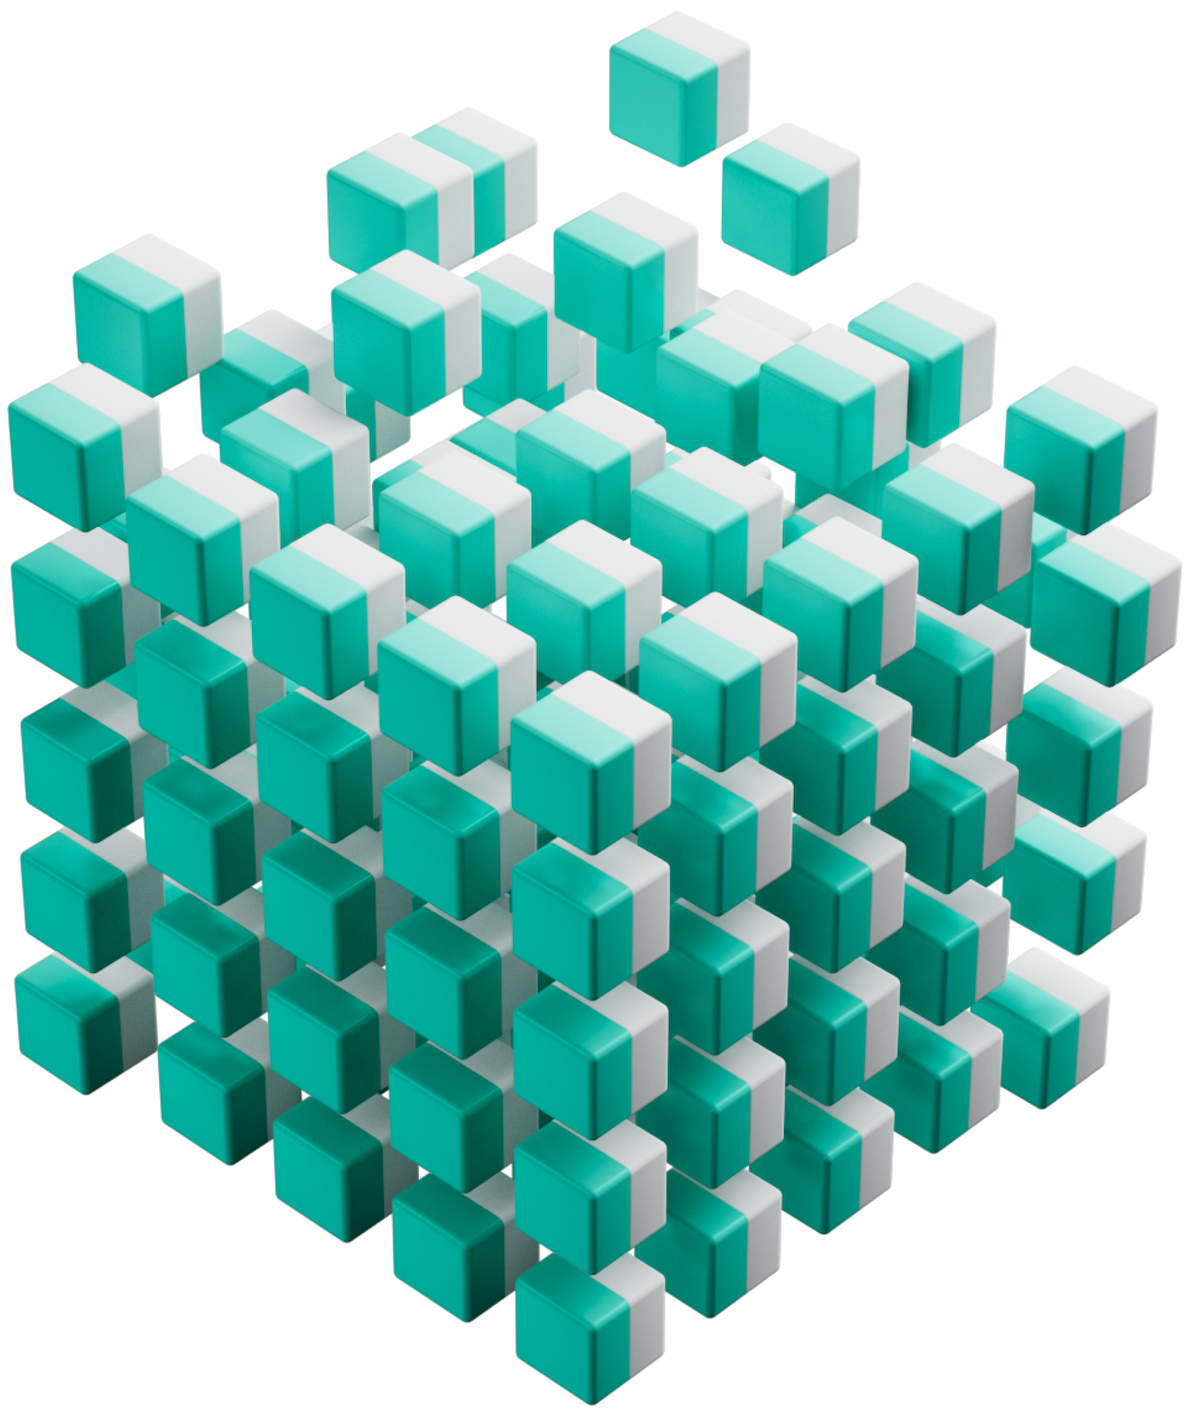 Cube of blocks